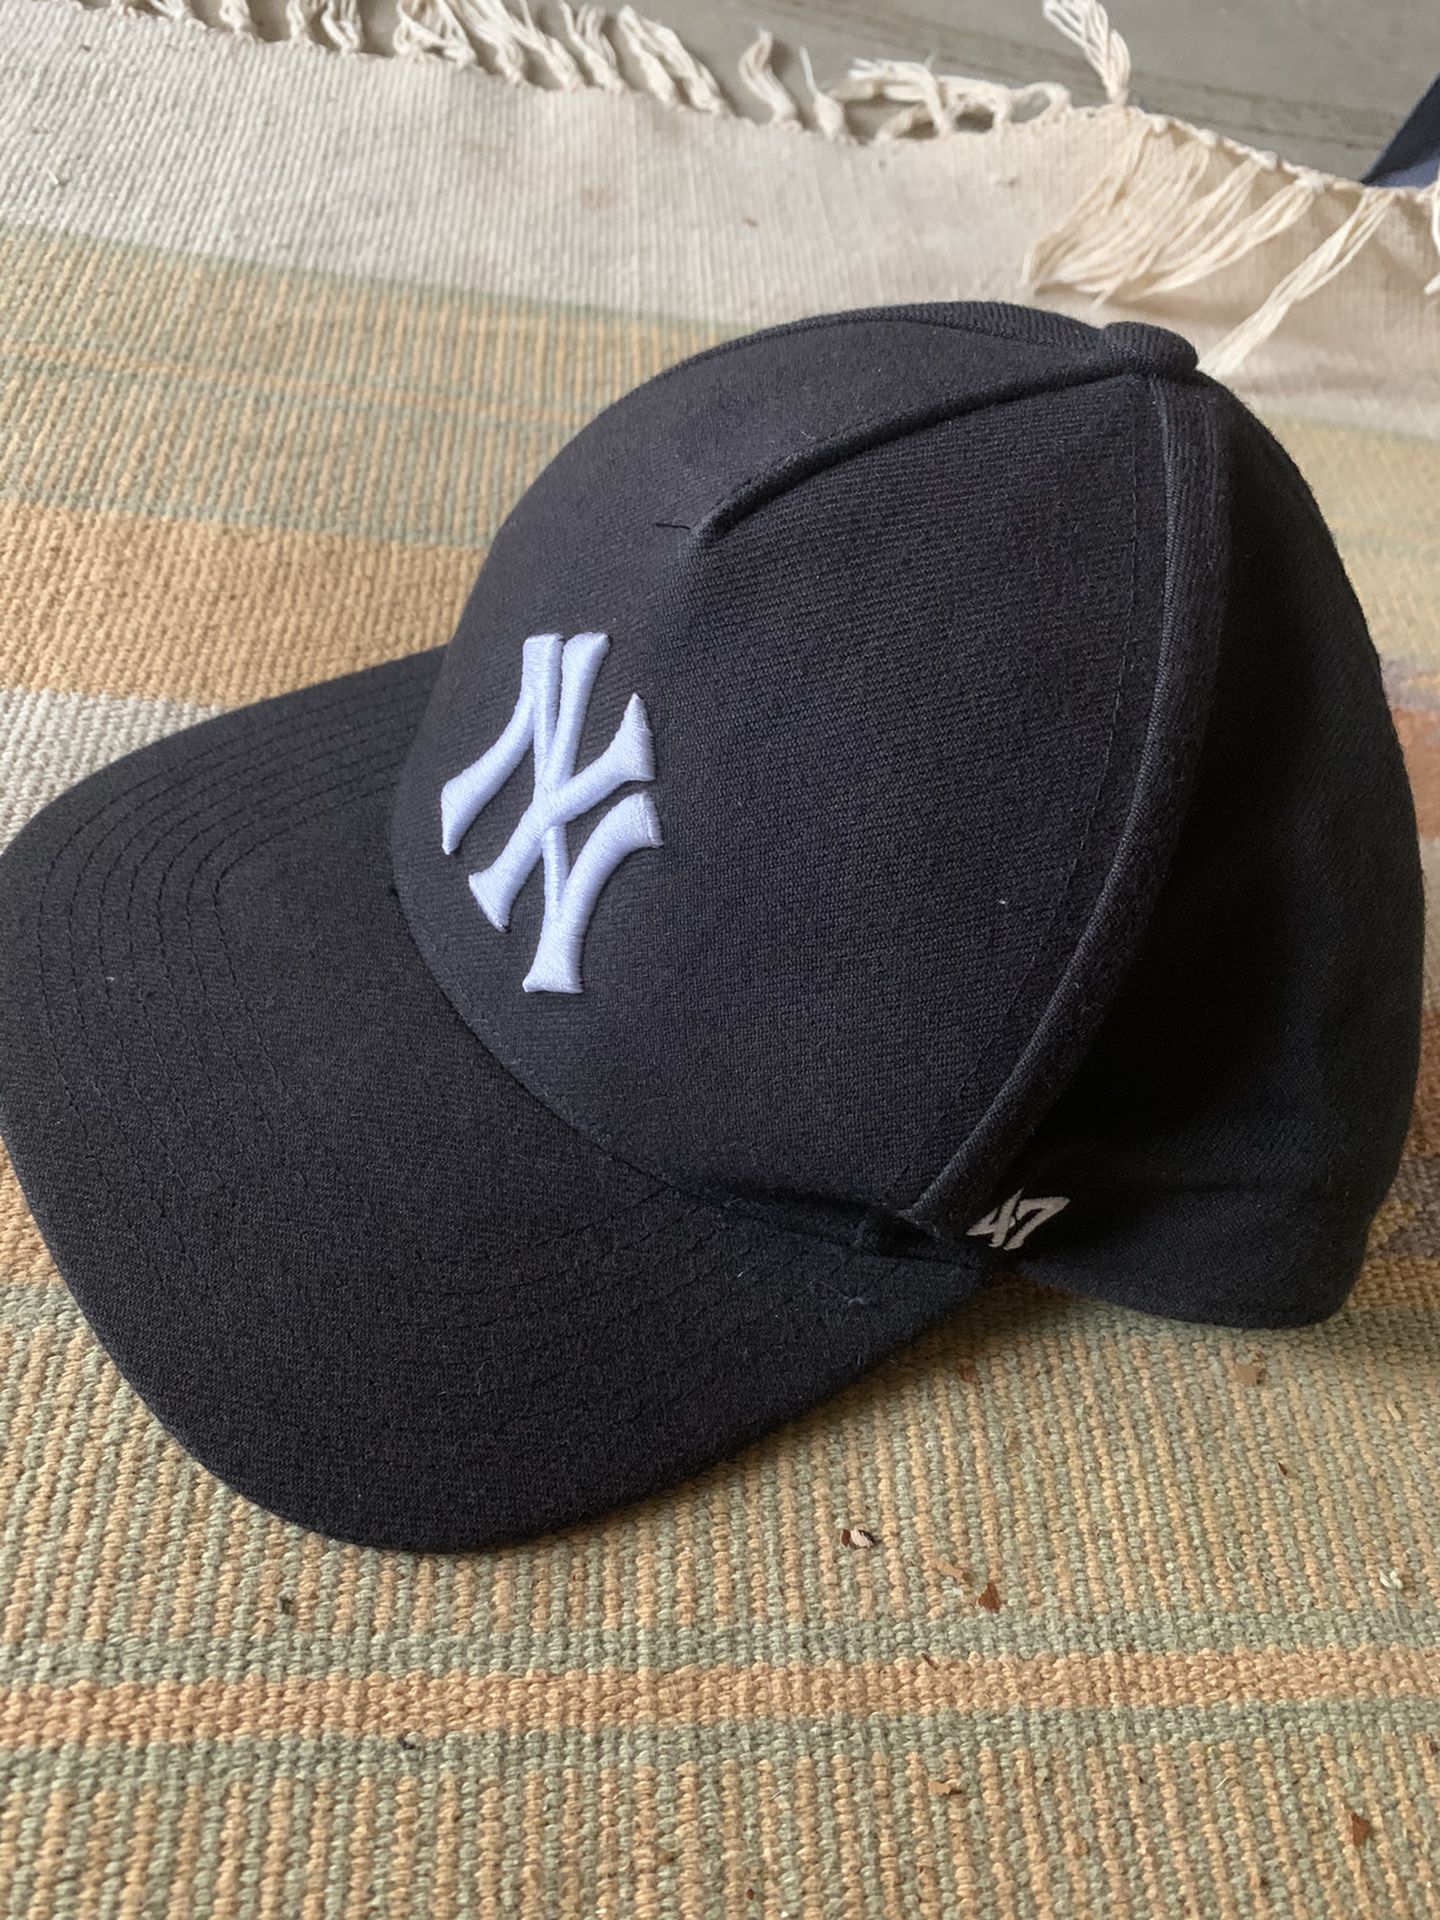 Supreme Yankee clip on hat